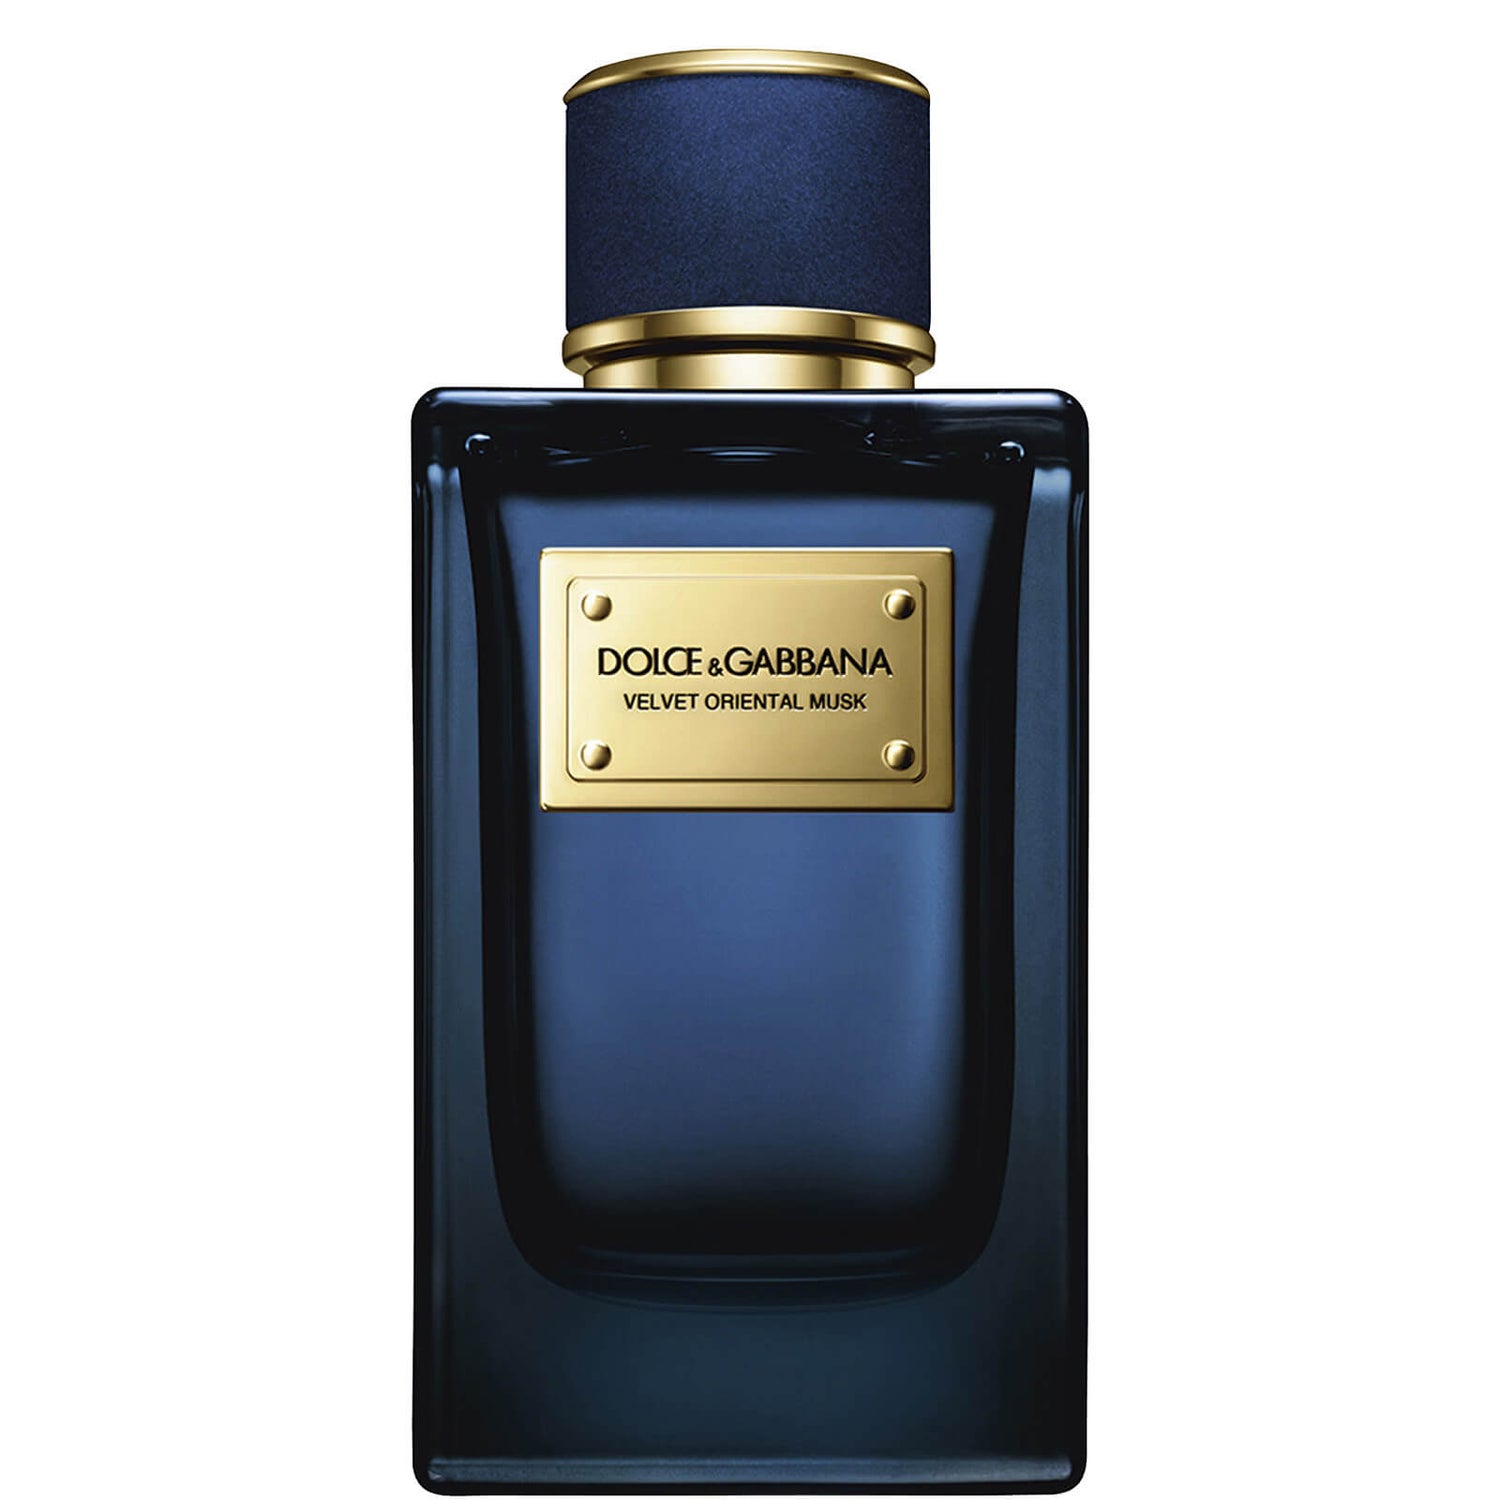 Dolce&Gabbana Velvet Oriental Musk Eau de Parfum - 150ml Dolce&Gabbana Velvet Oriental Musk parfémovaná voda - 150 ml